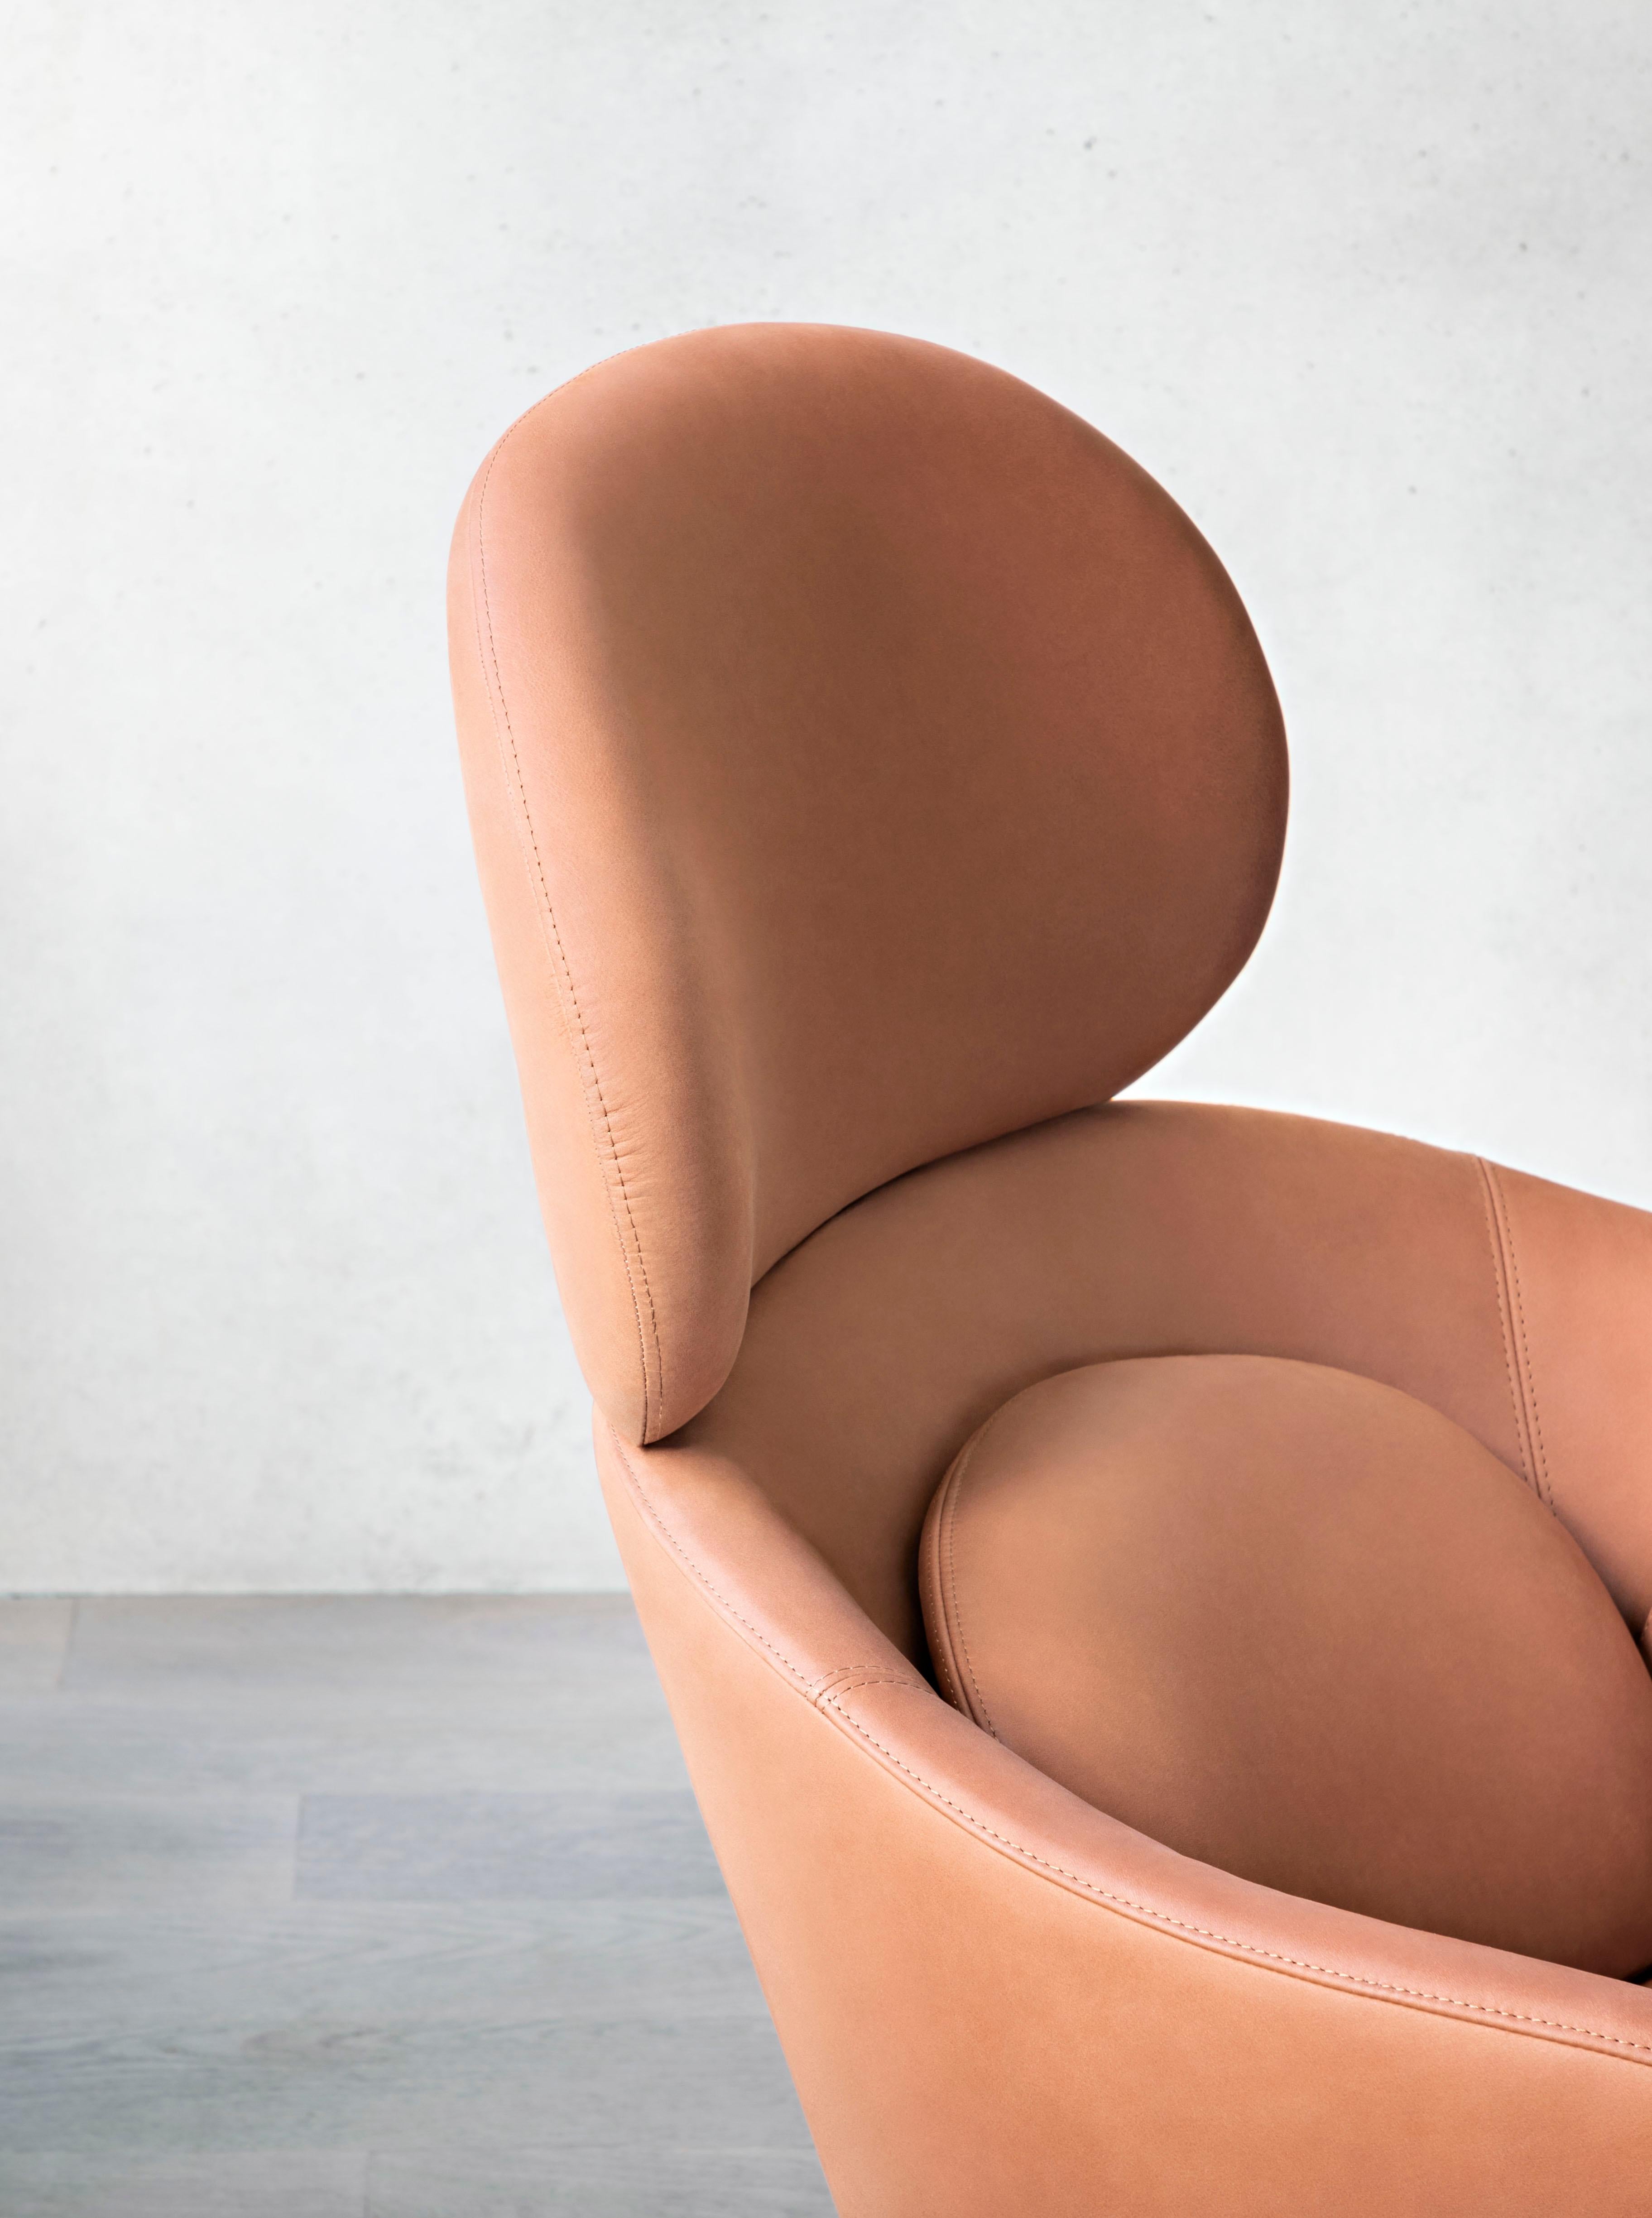 Sunset Bergre-Stuhl mit Polsterhocker in Avant Aprs Grau mit Aluminiumfüßen, Nicola Pavan im Angebot 1